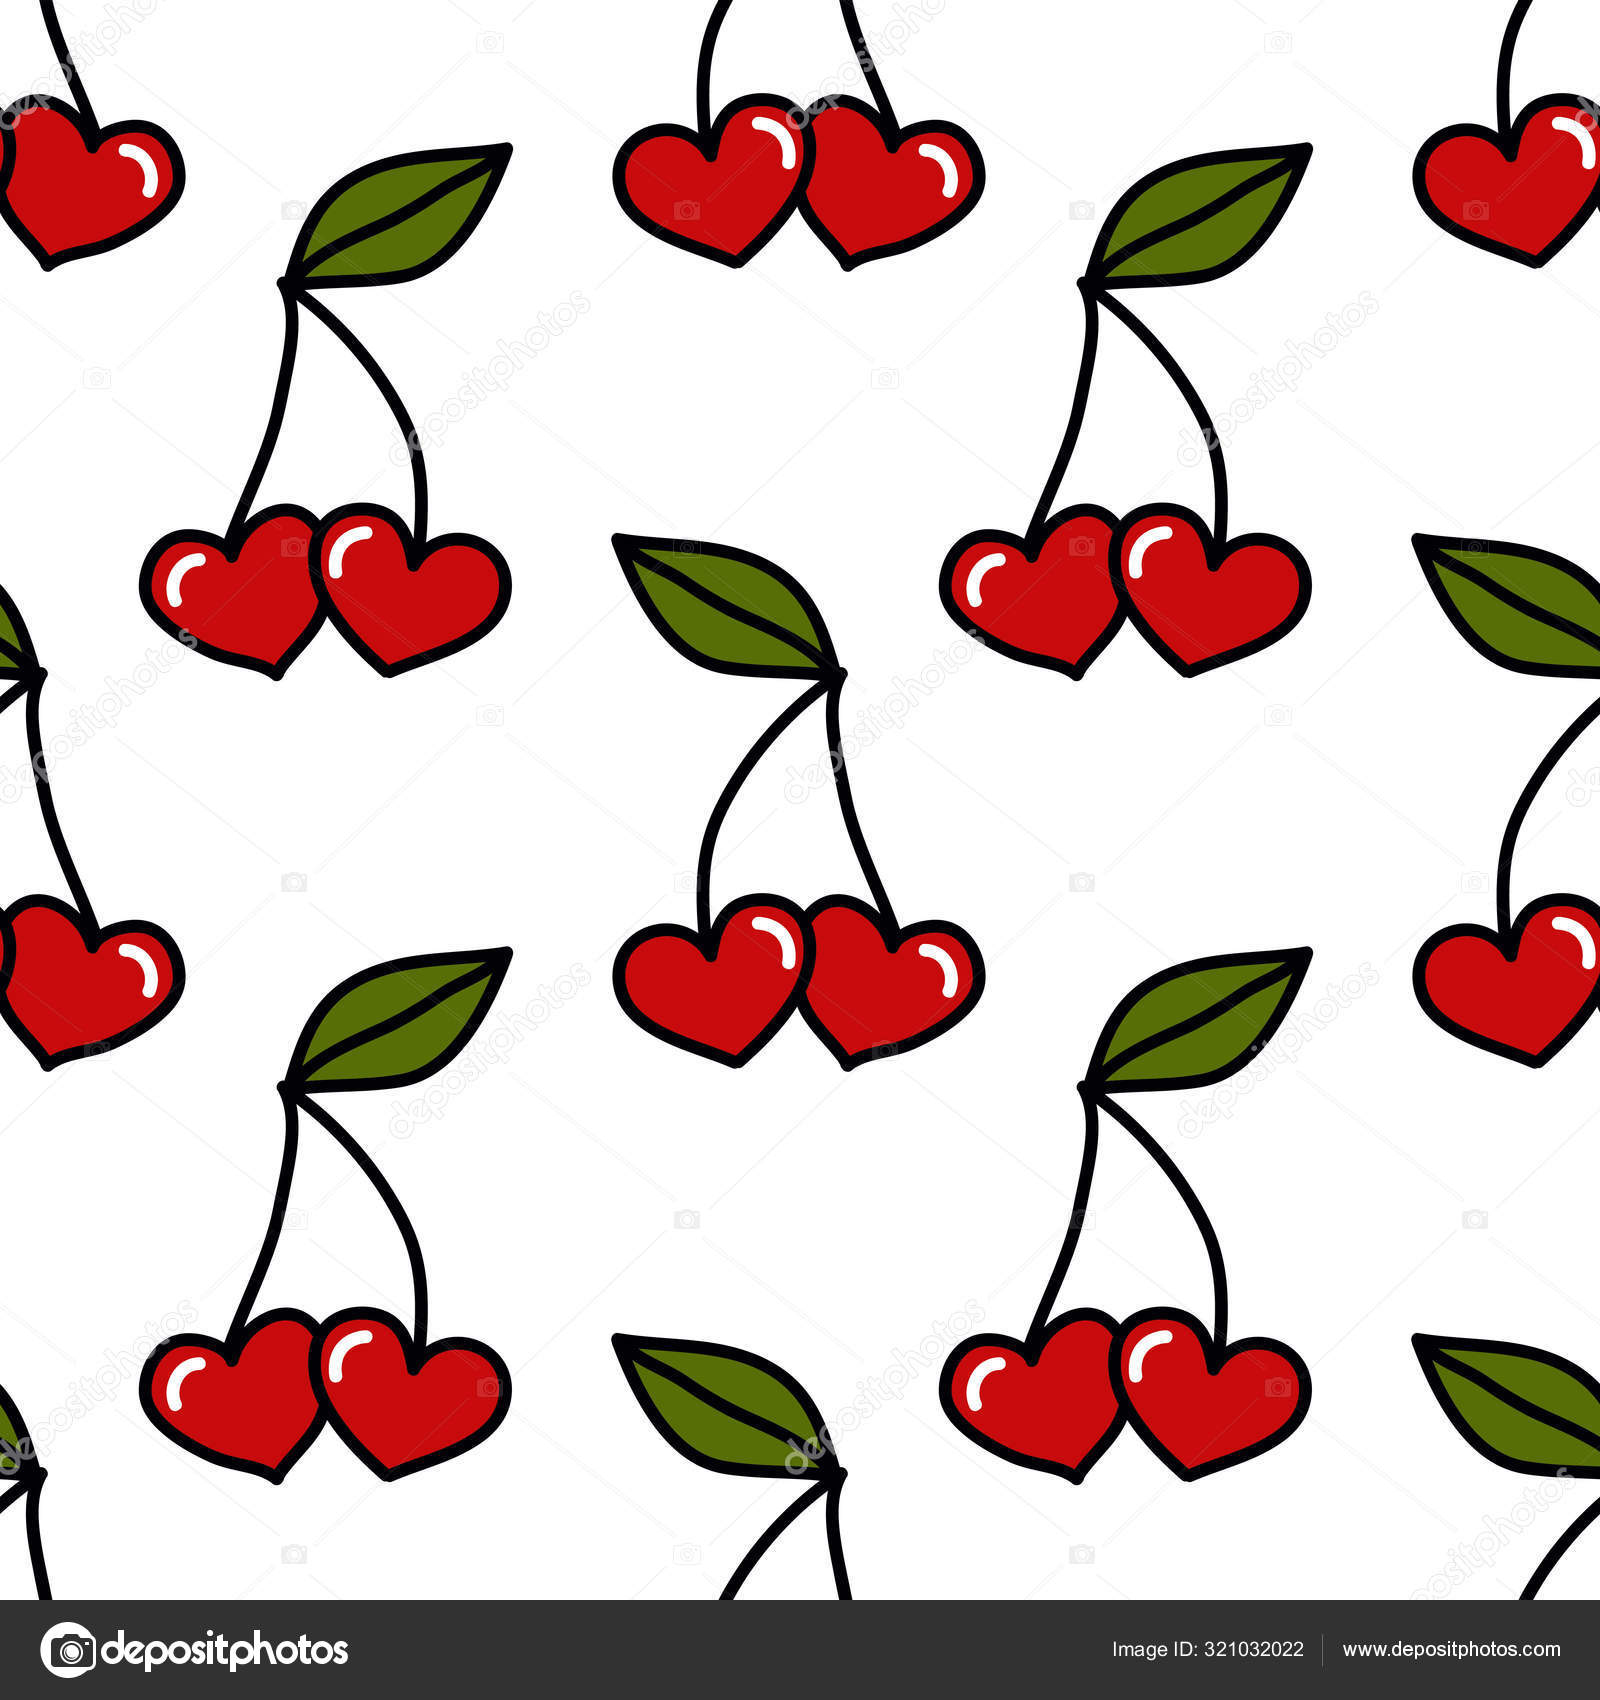 https://st3.depositphotos.com/3878845/32103/v/1600/depositphotos_321032022-stock-illustration-cherry-hearts-seamless-doodle-pattern.jpg